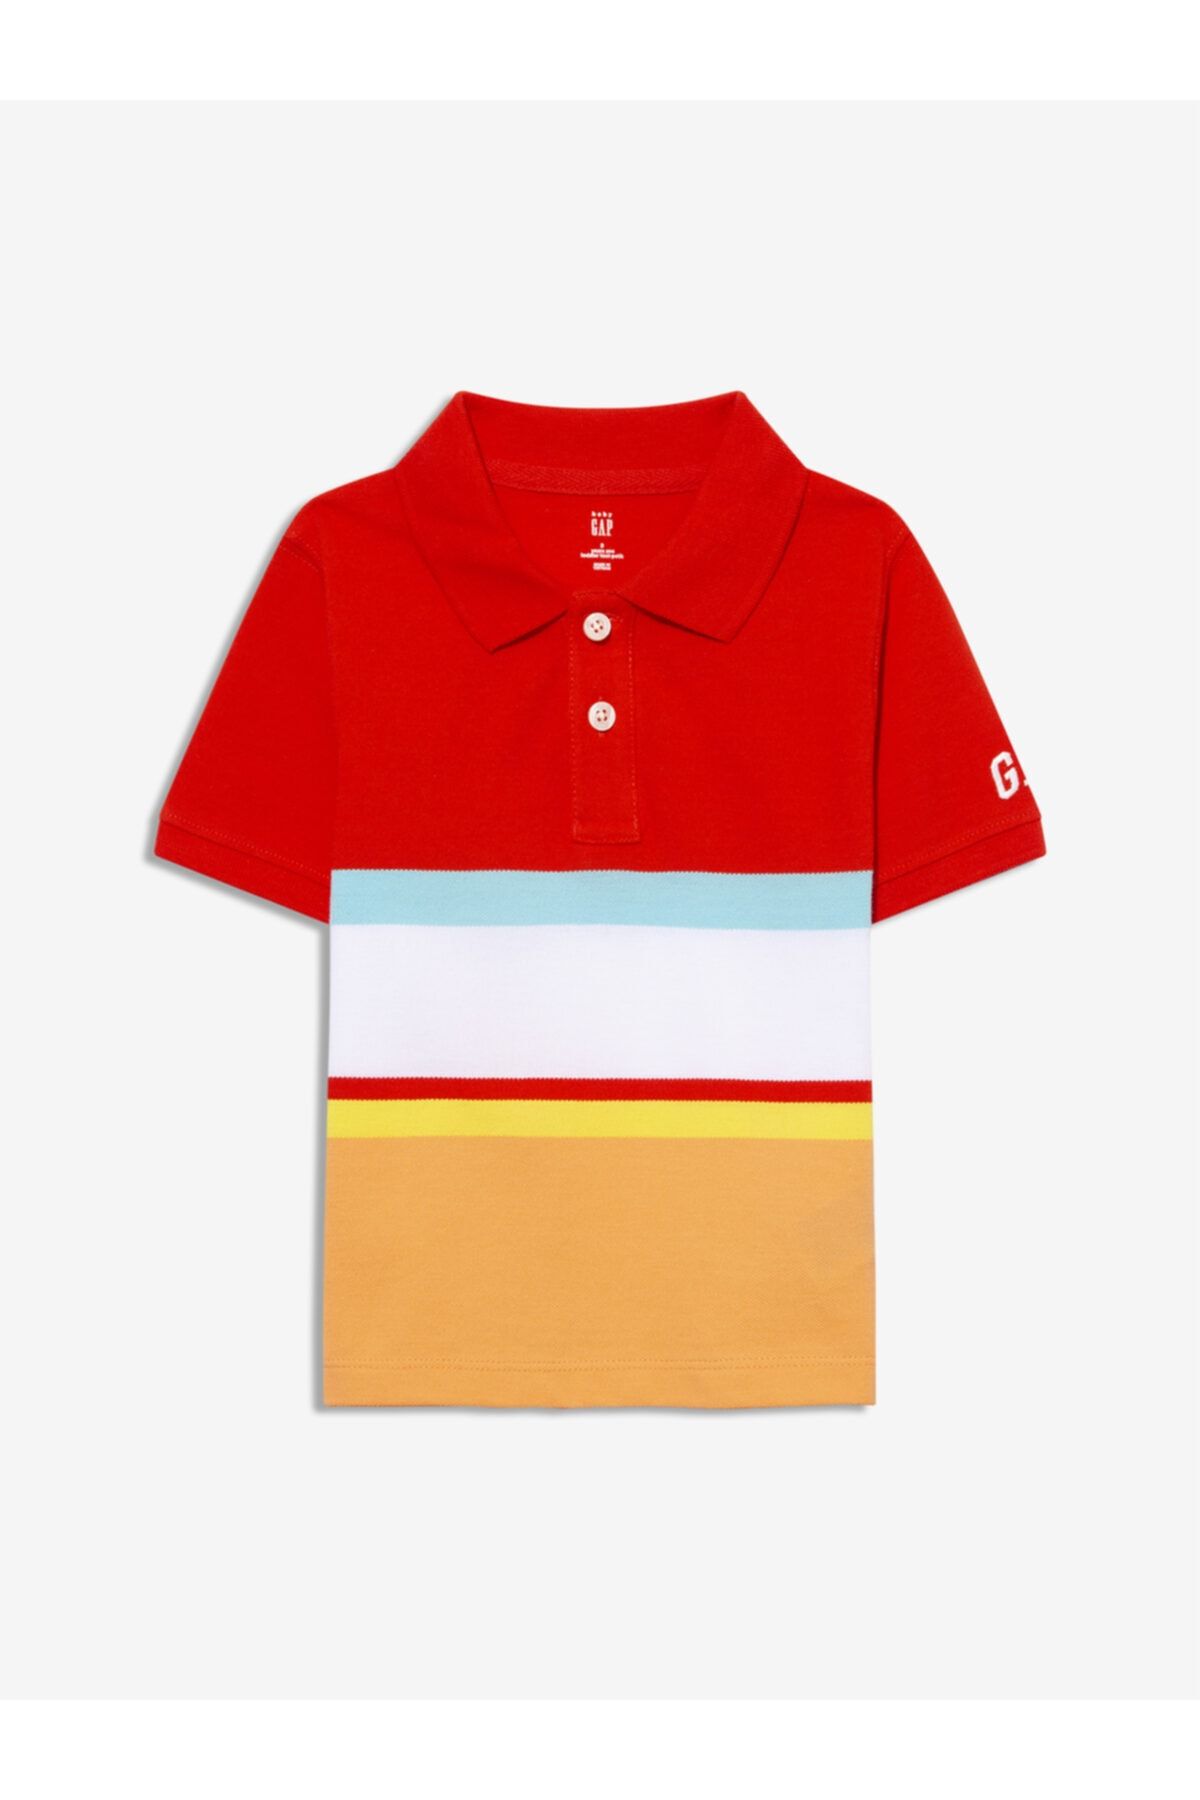 GAP Erkek Bebek Kırmızı Renk Bloklu Polo Yaka T-shirt